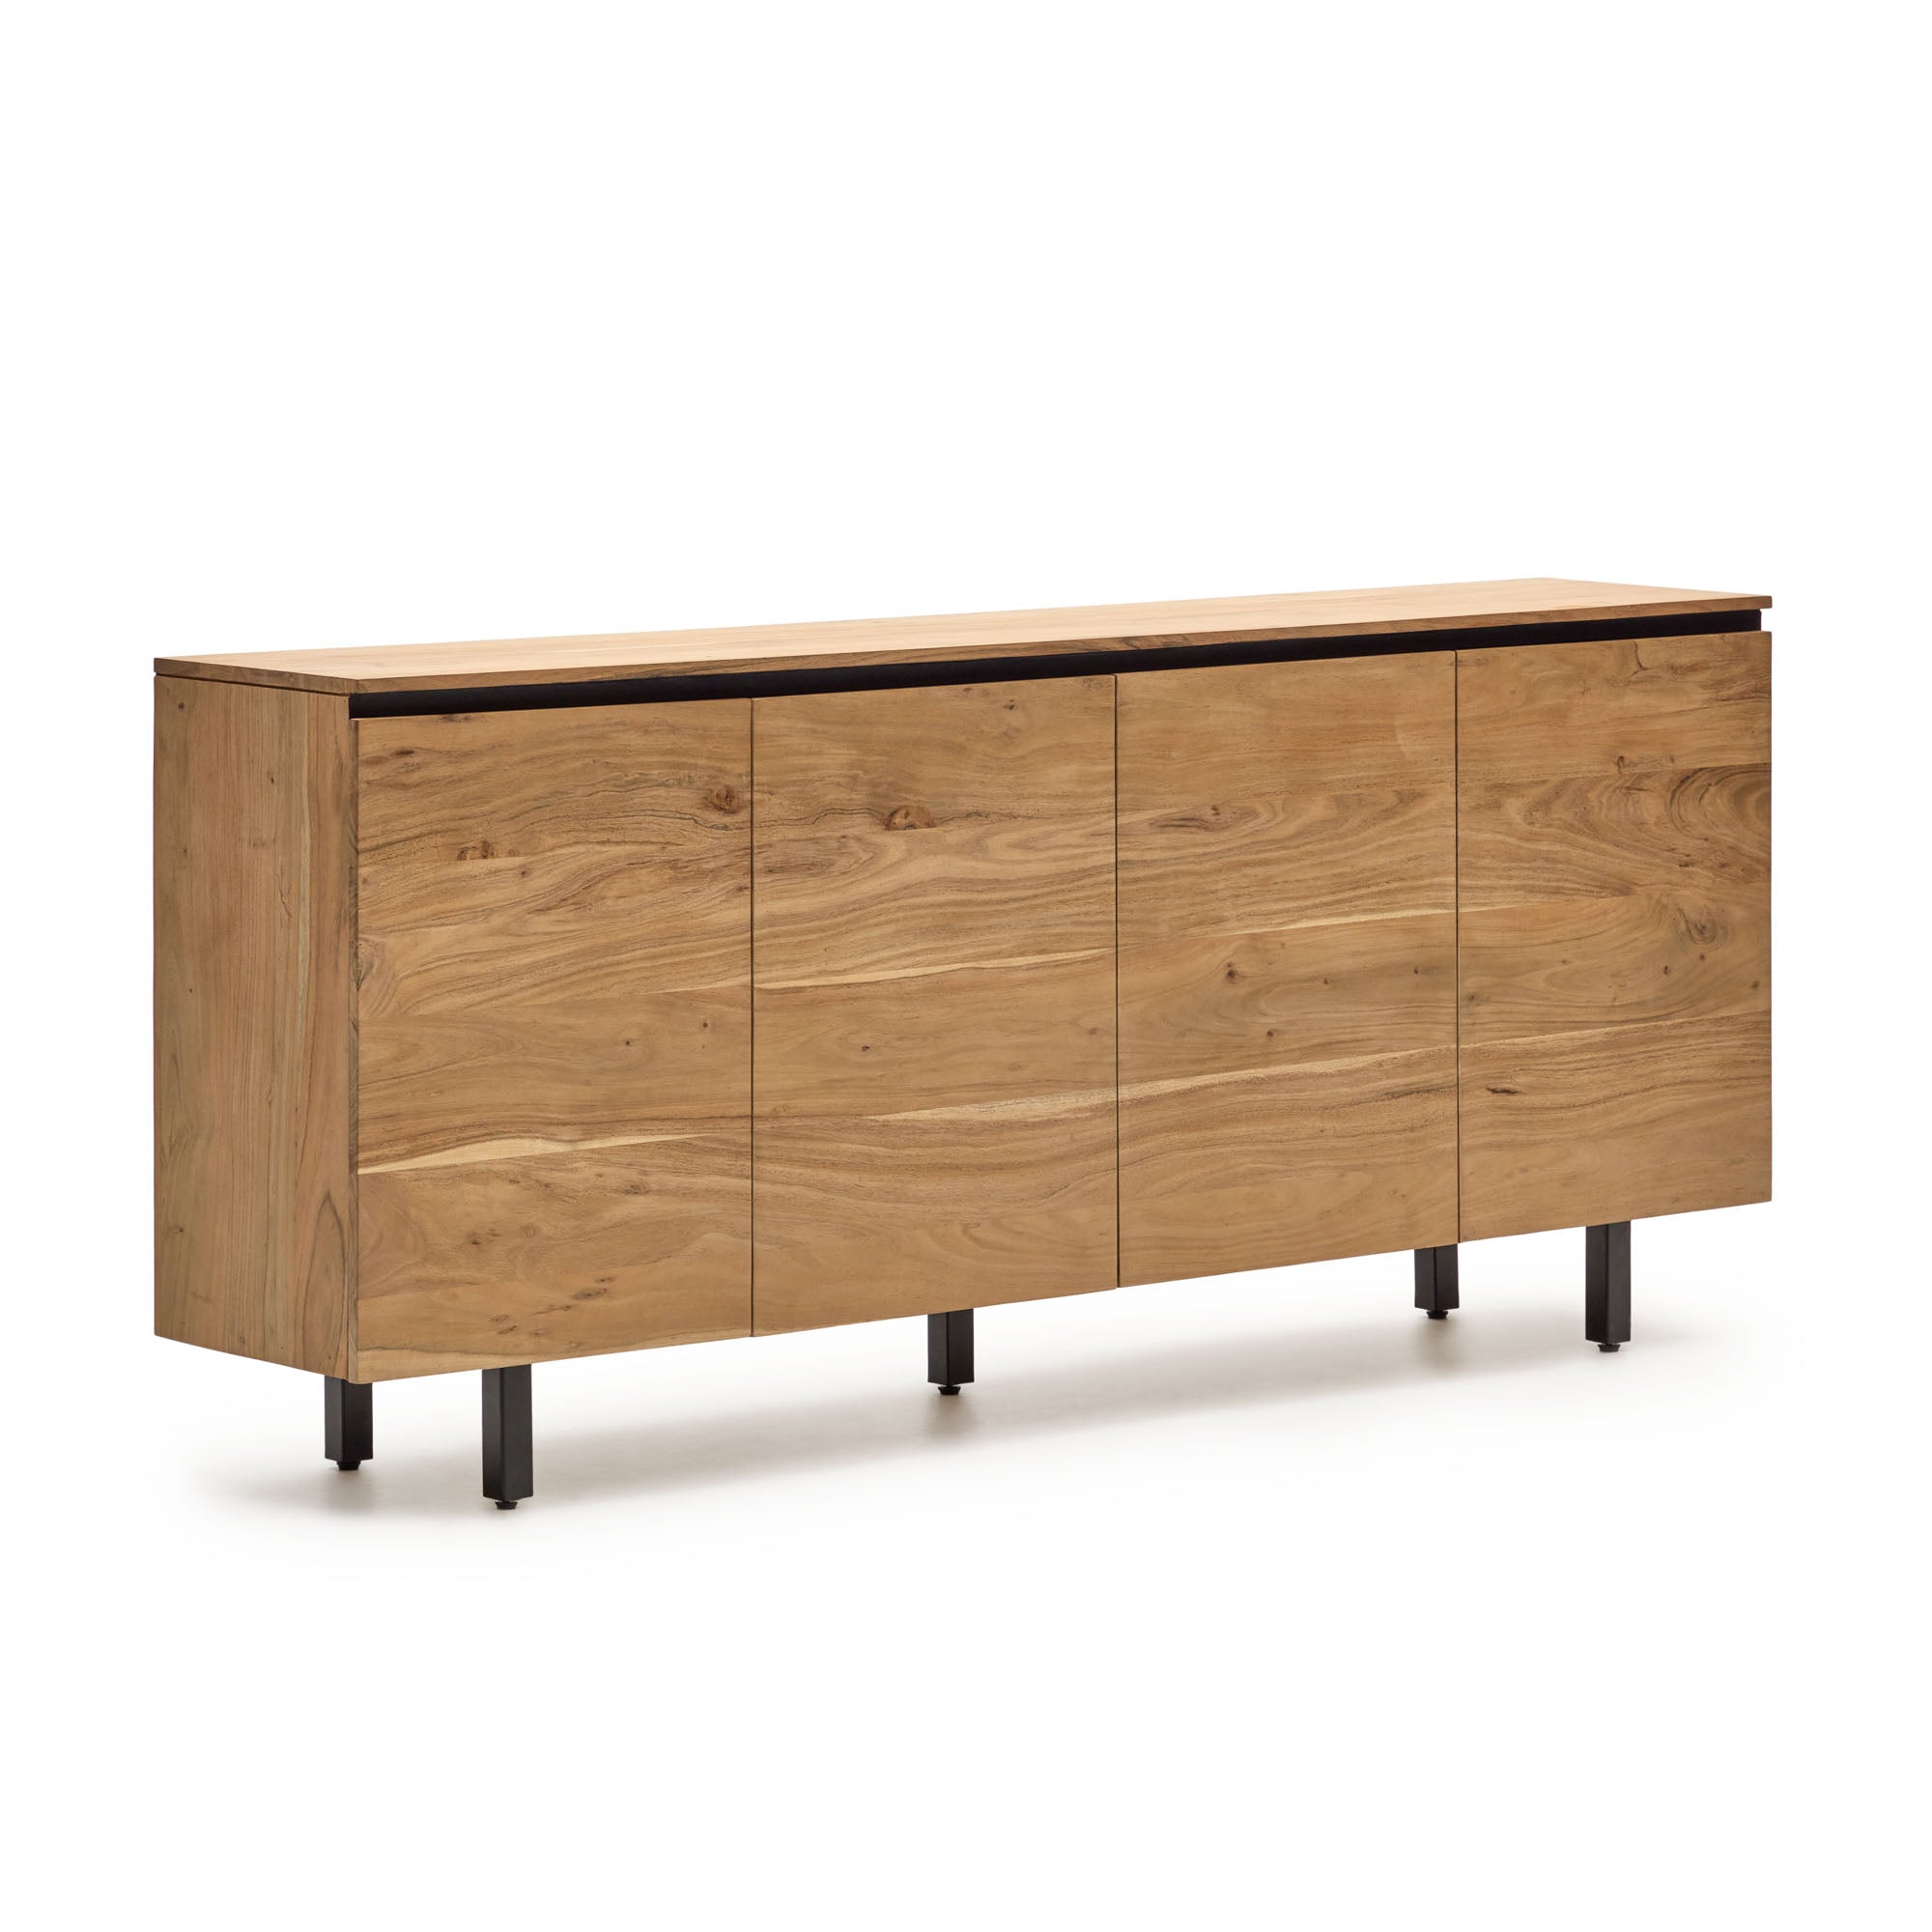 Uxue solid acacia wood 4 door sideboard in a natural finish, 200 x 88 cm